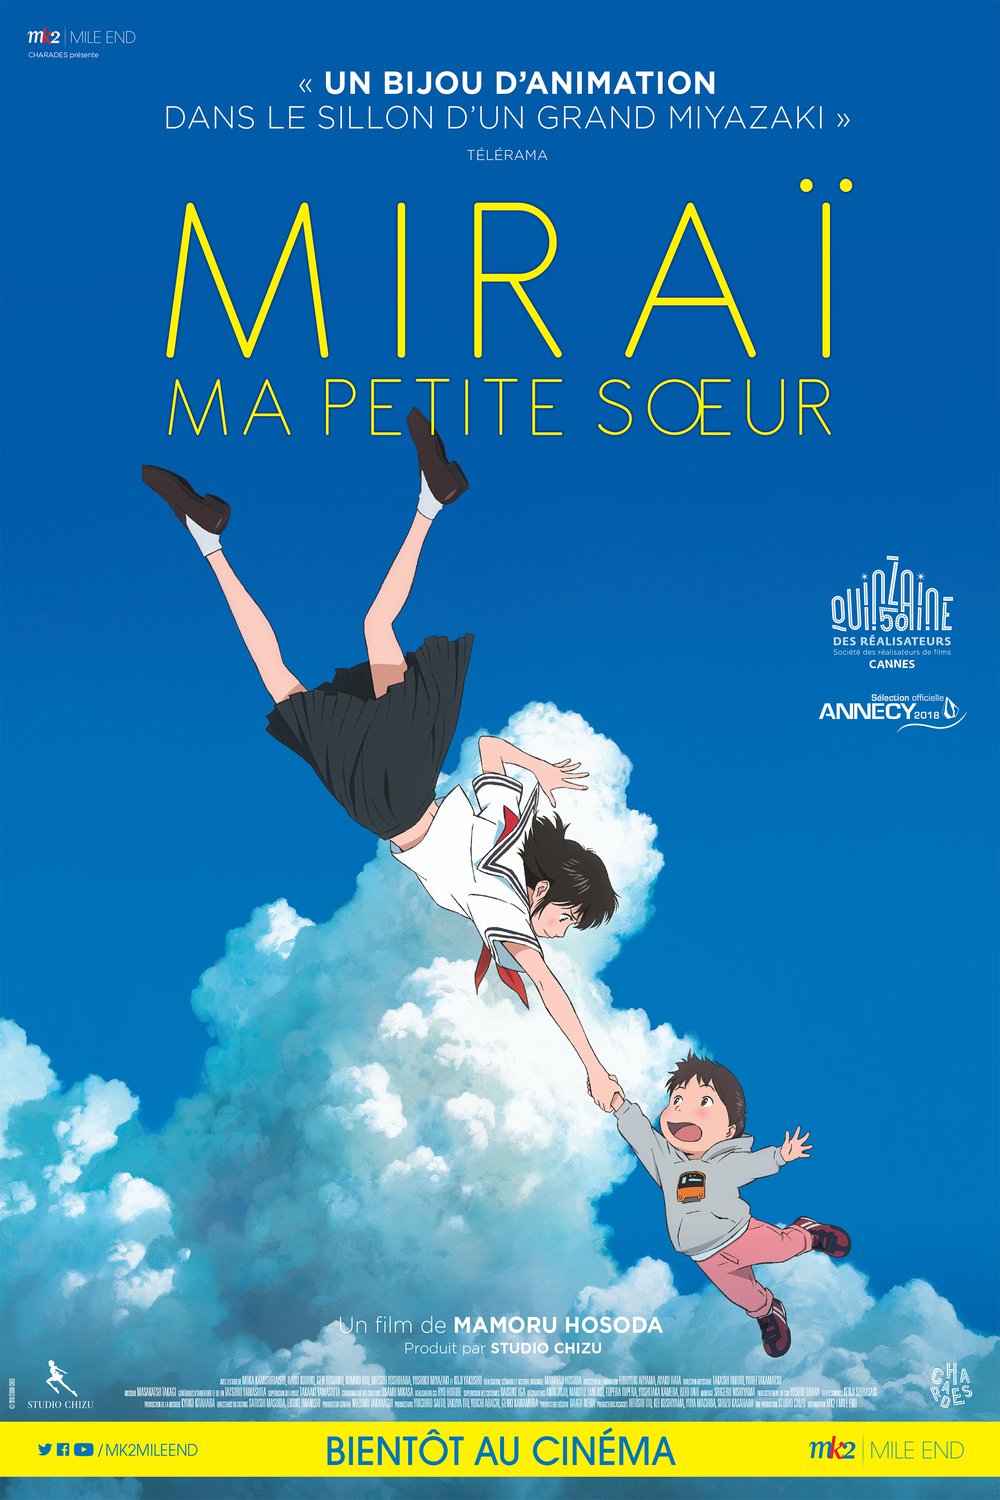 Poster of the movie Miraï ma petite soeur